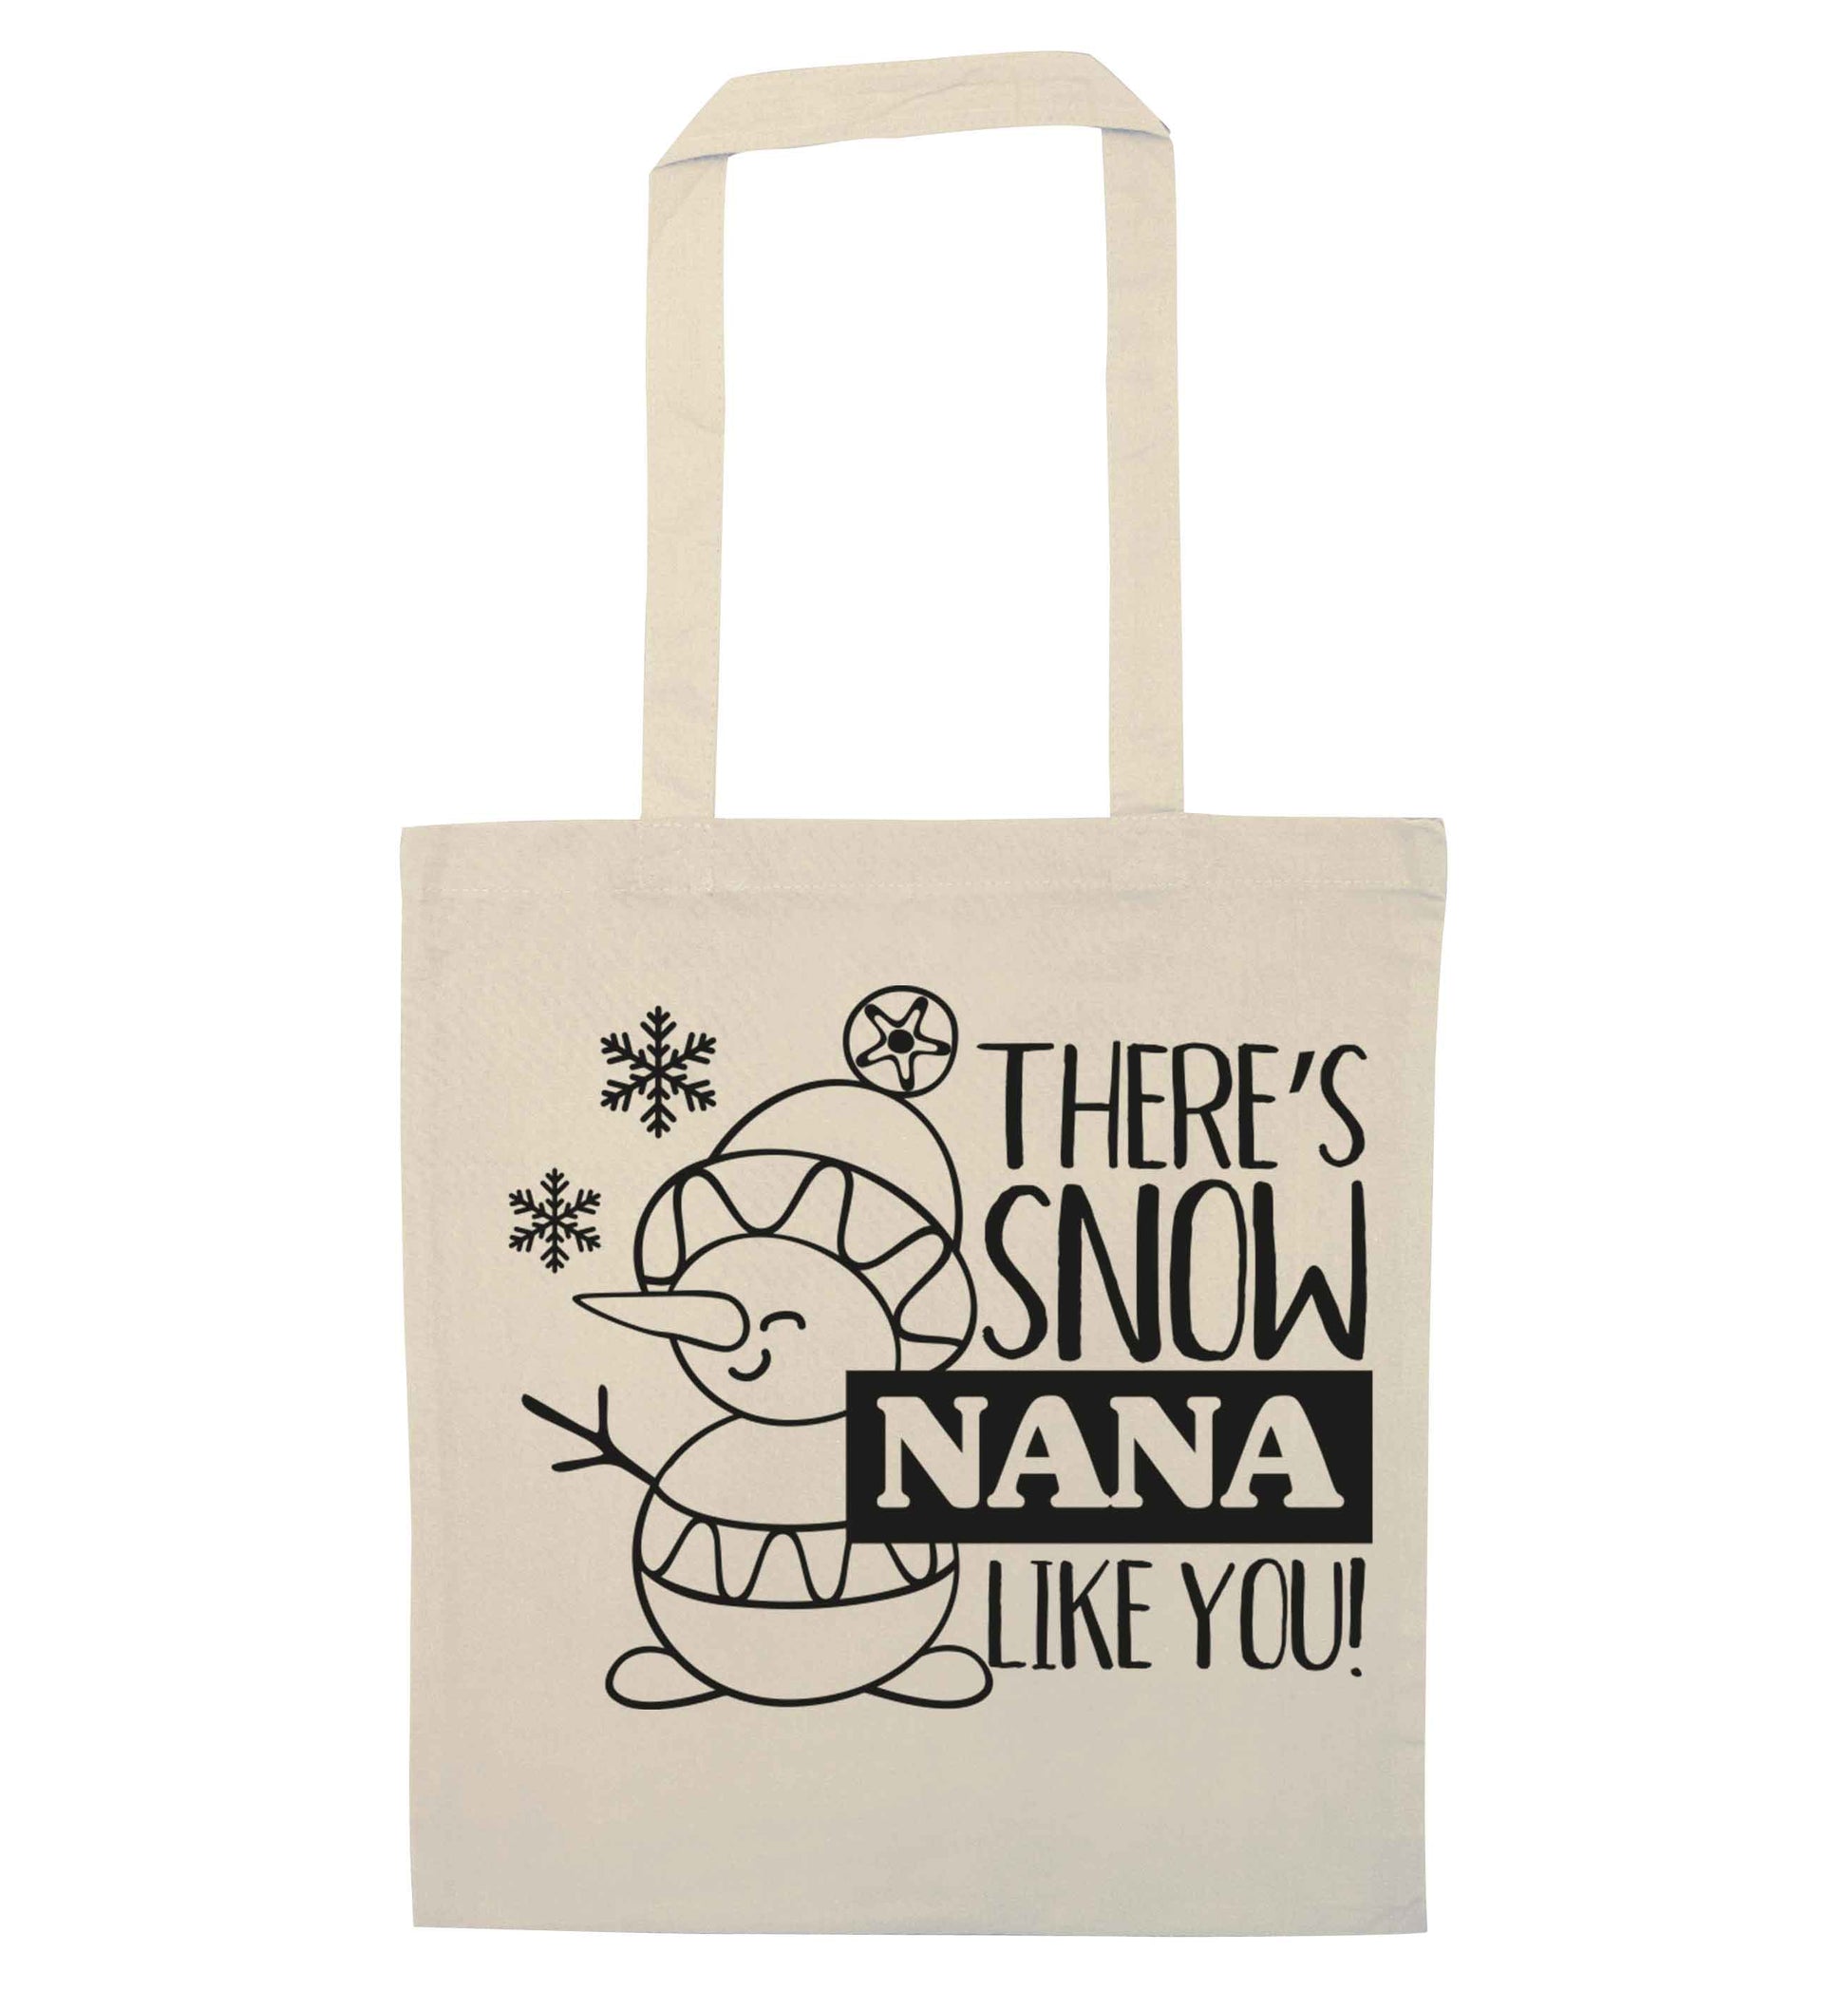 There's snow nana like you natural tote bag